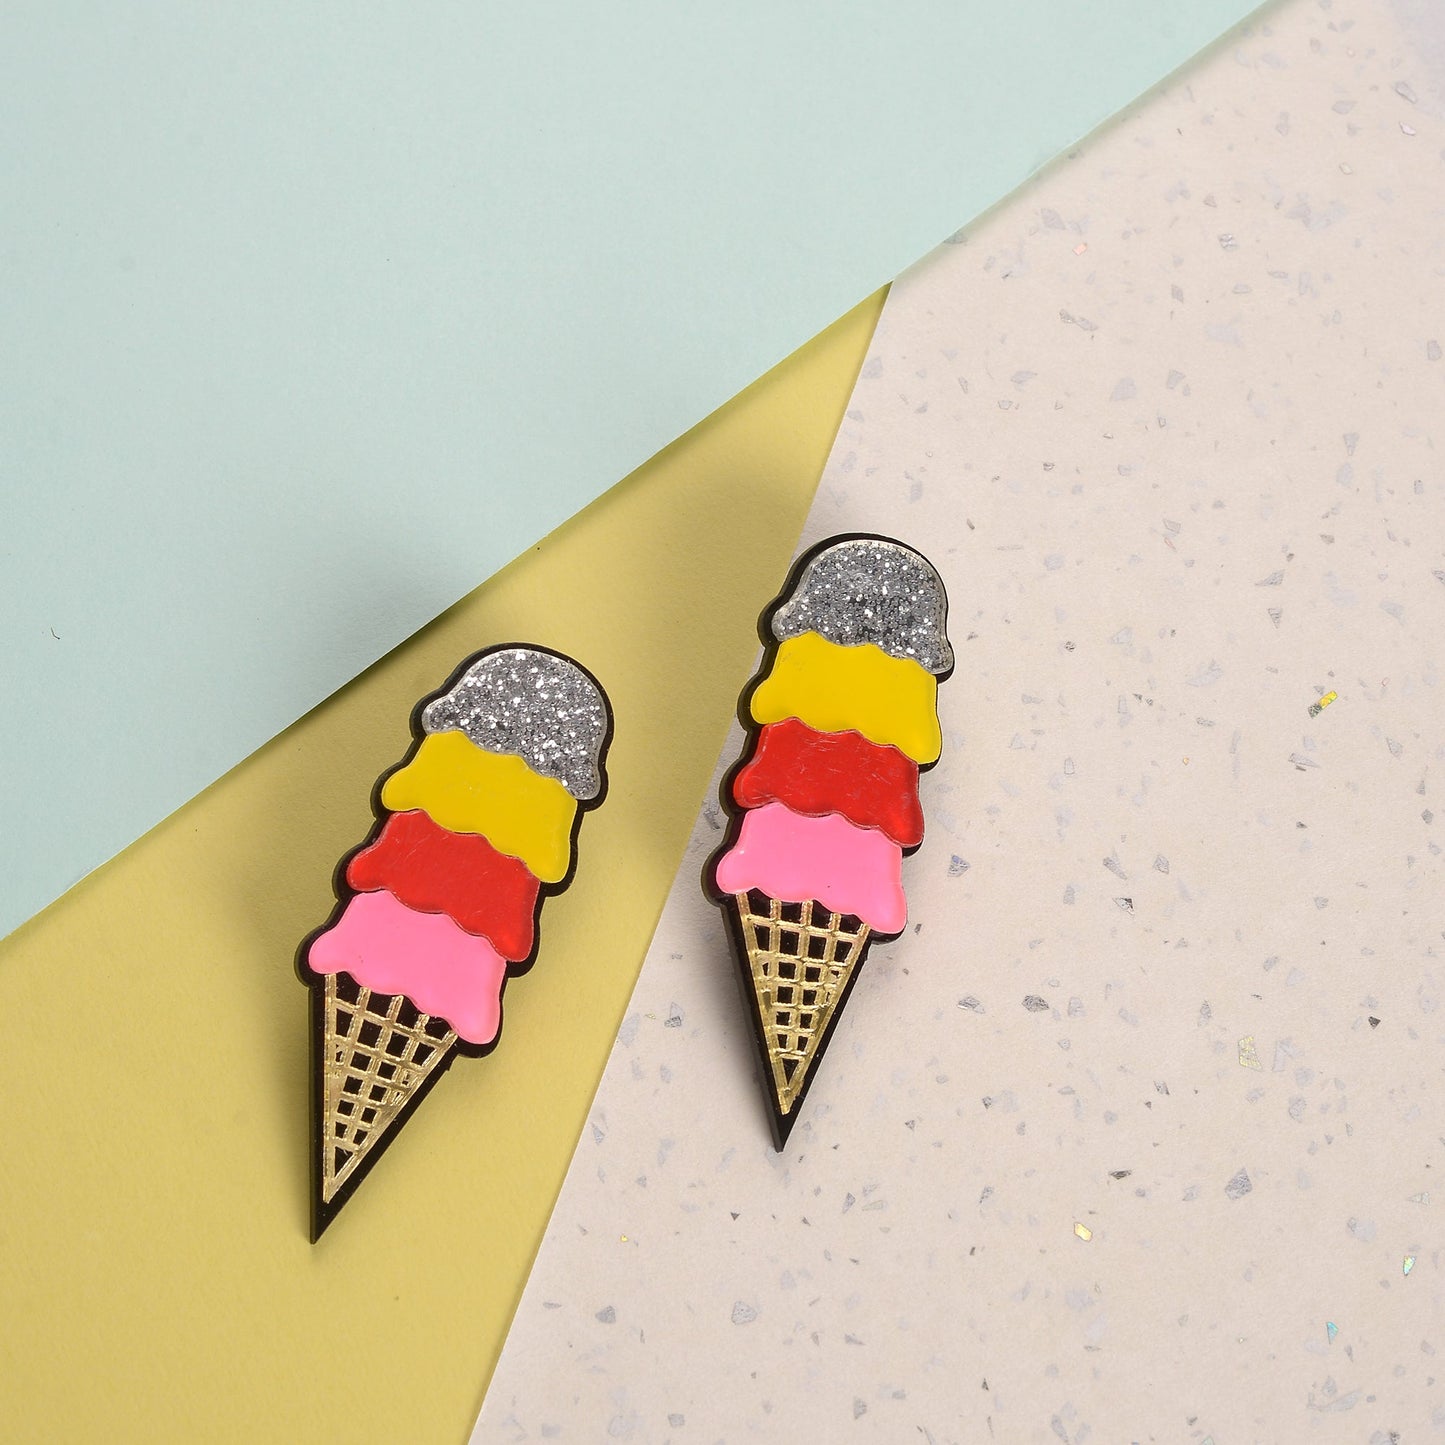 Cone Icecream Earrings